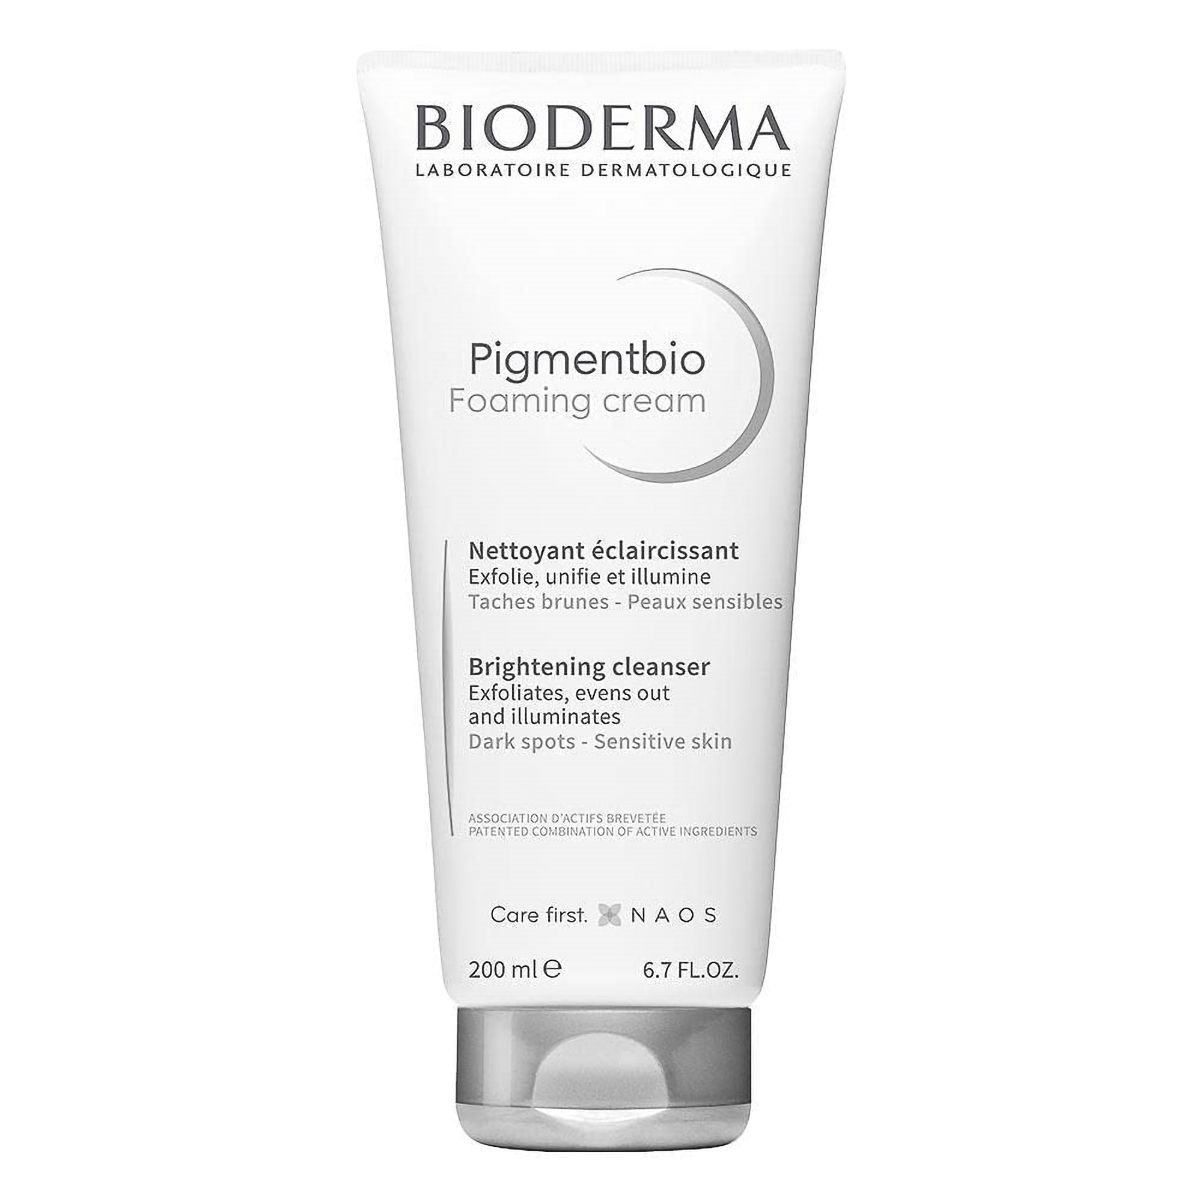 Buy Bioderma Pigmentbio Foaming Cream 200 ml | Azelaic Acid, Coco Glucosides, Glycerin Oleate | Brightening, Exfoliating Cleanser | Evens Out Skin | Reduces Dark Spots | For Sensitive Skin Online